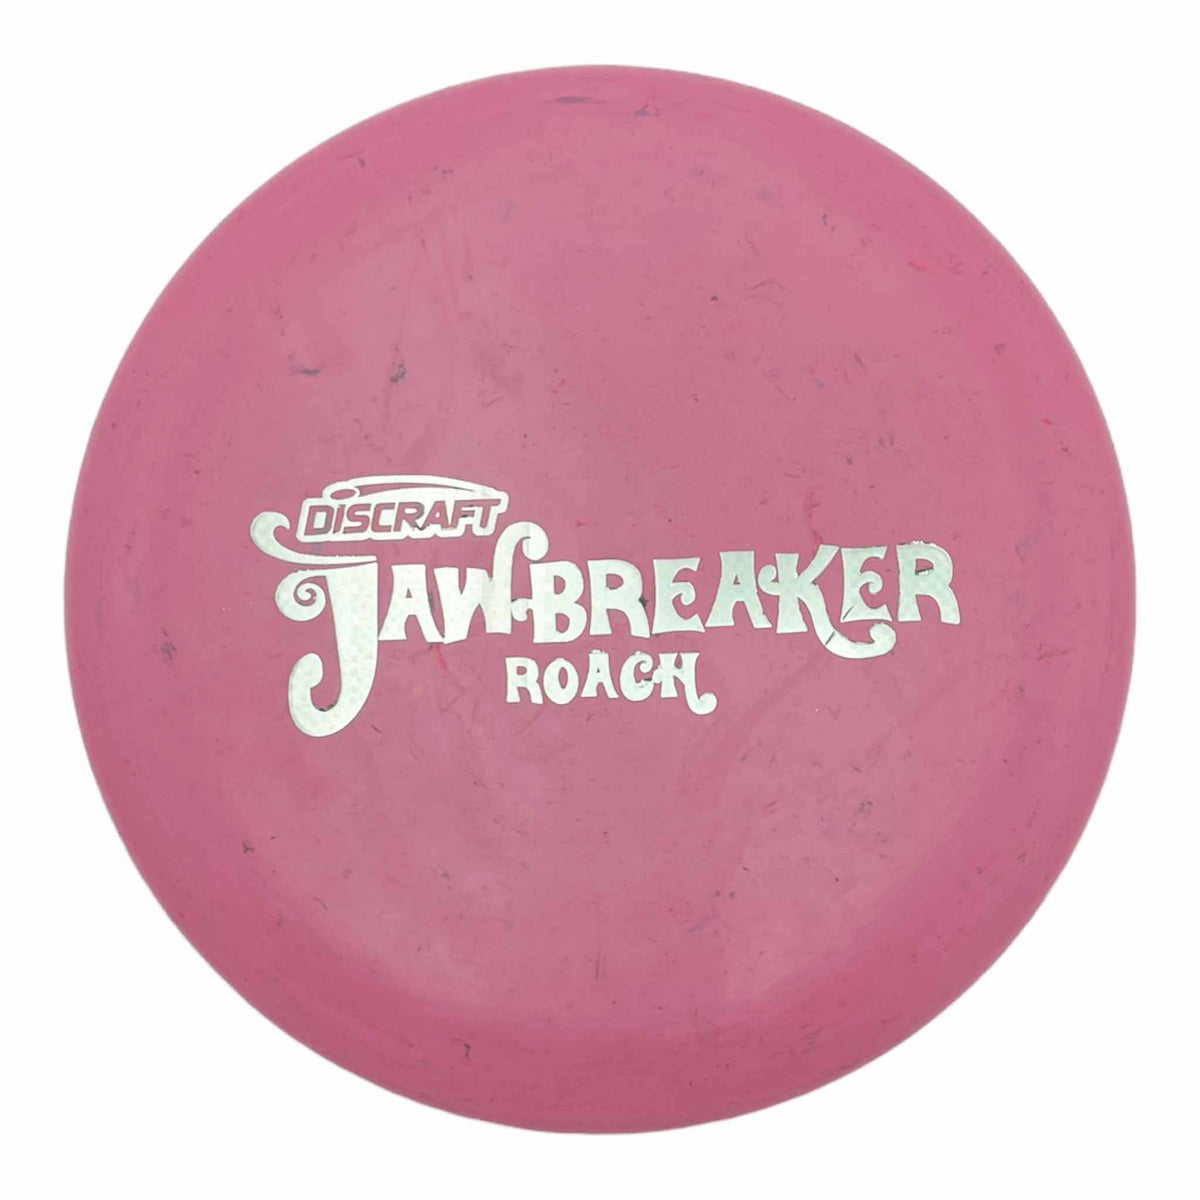 Discraft Jawbreaker Roach putter - Faded Pink